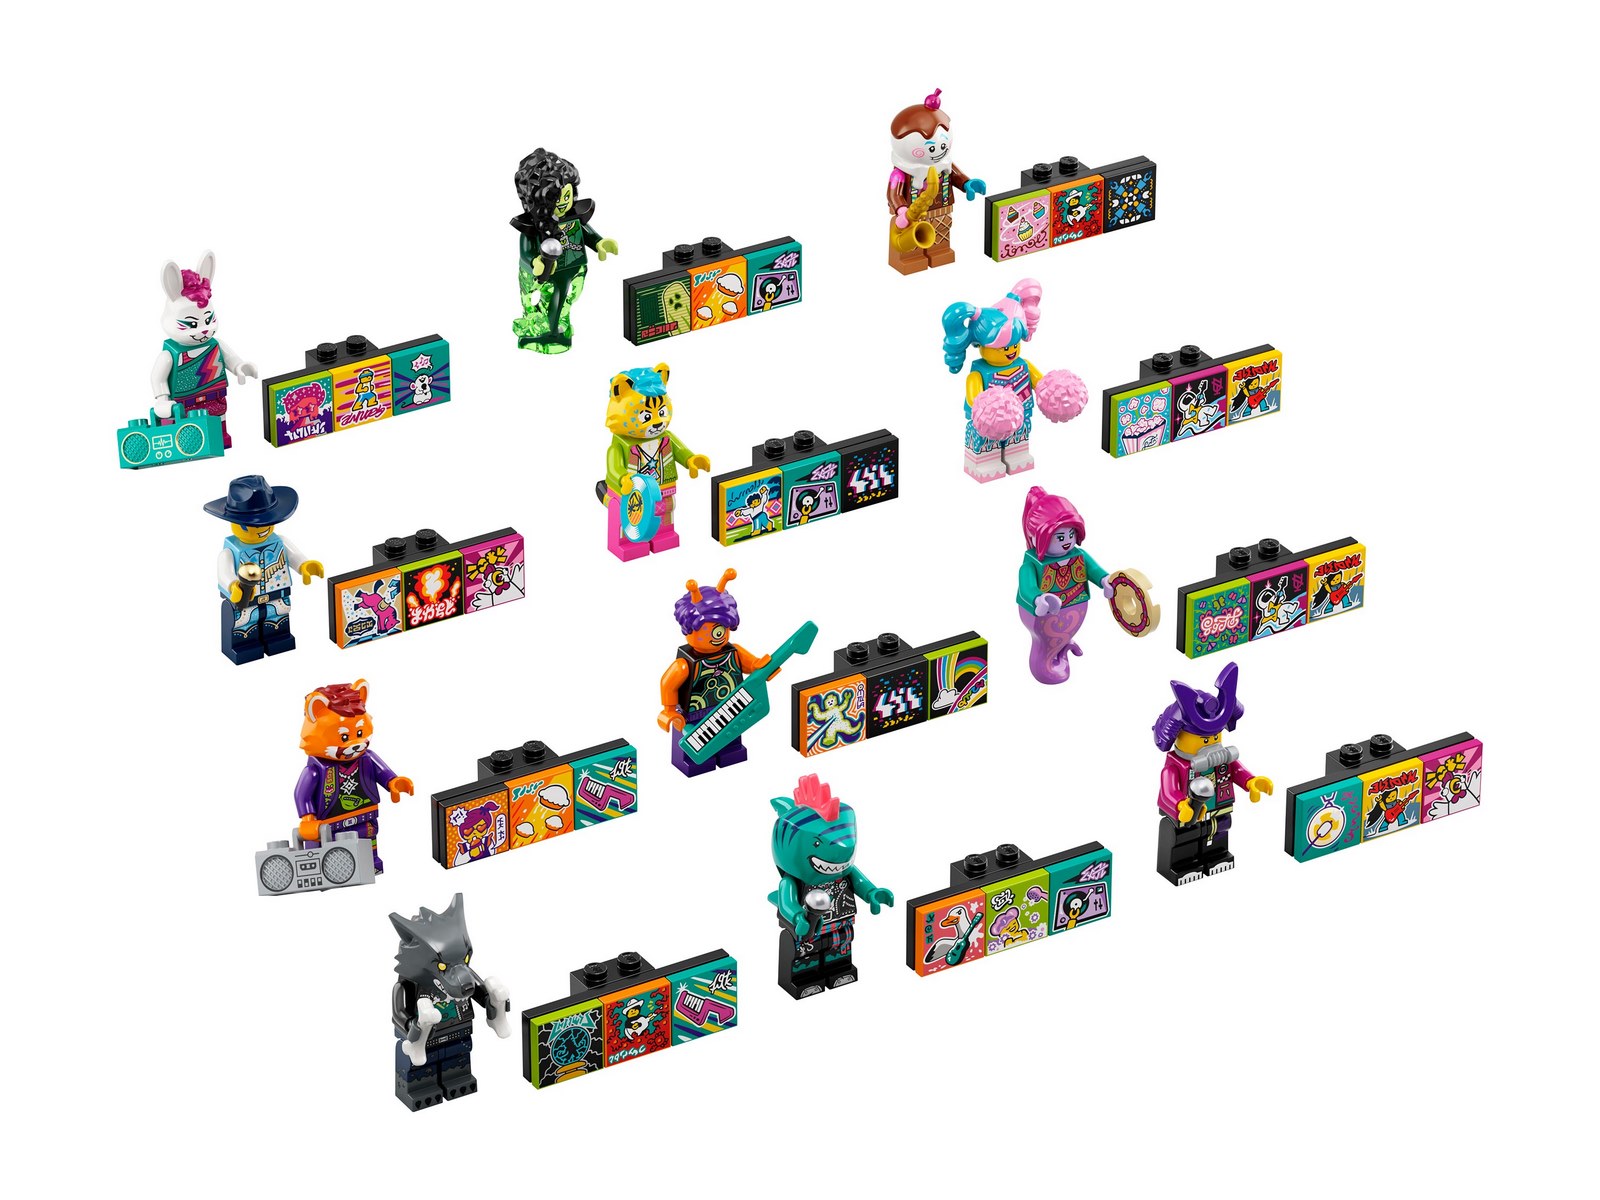 Конструктор LEGO Vidiyo «Бэндмейты» 43101 / 11 деталей